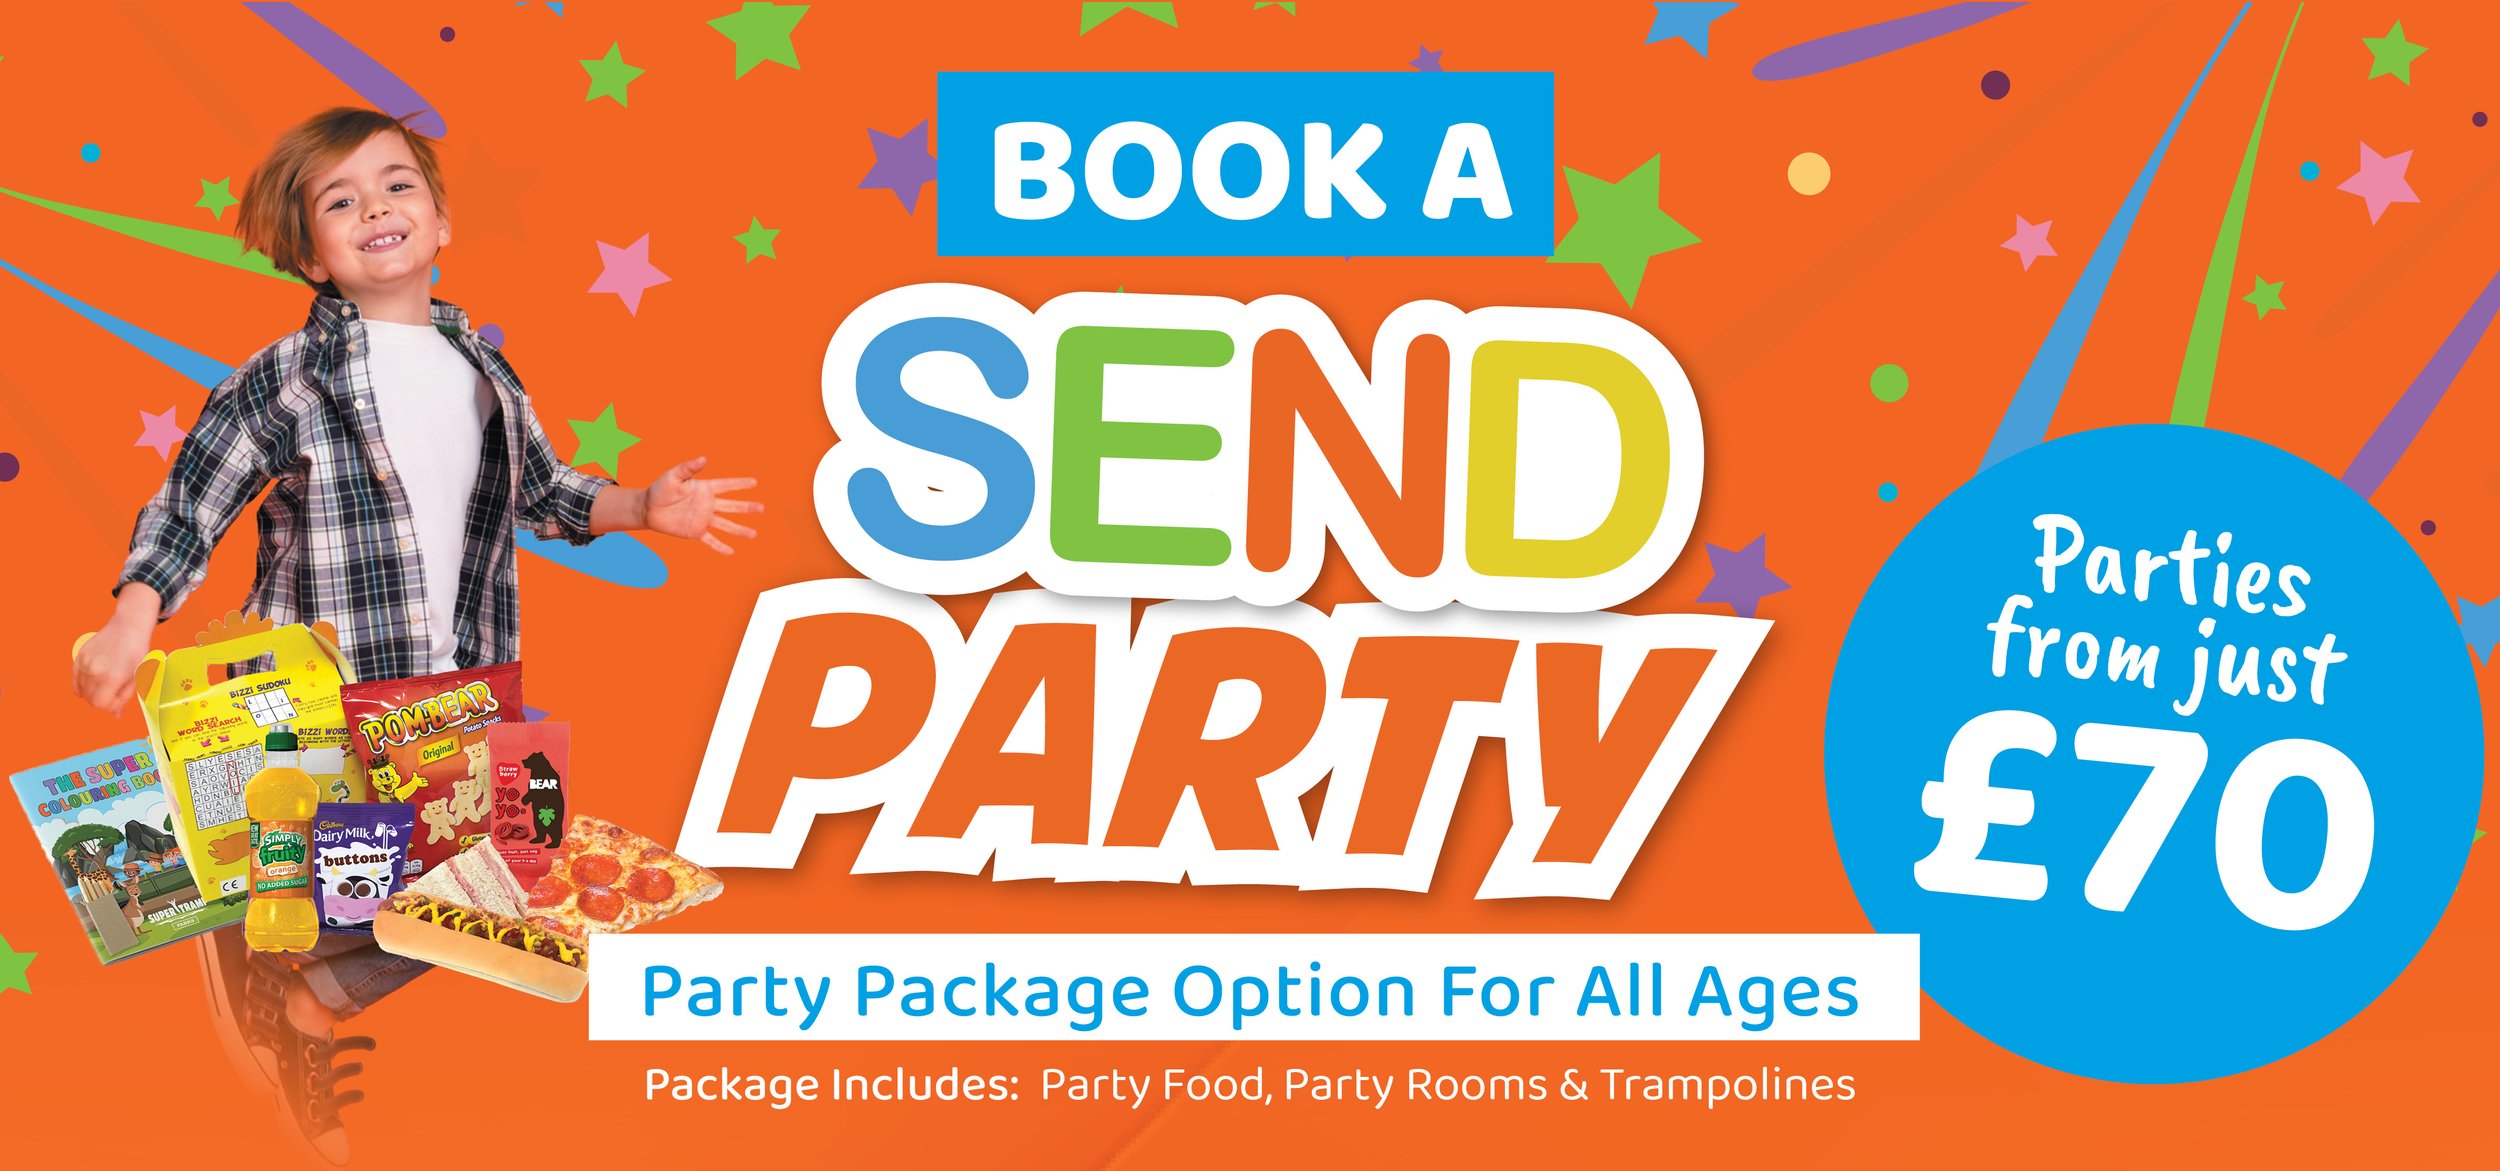 Book A SEND Party - Website Banners.jpg